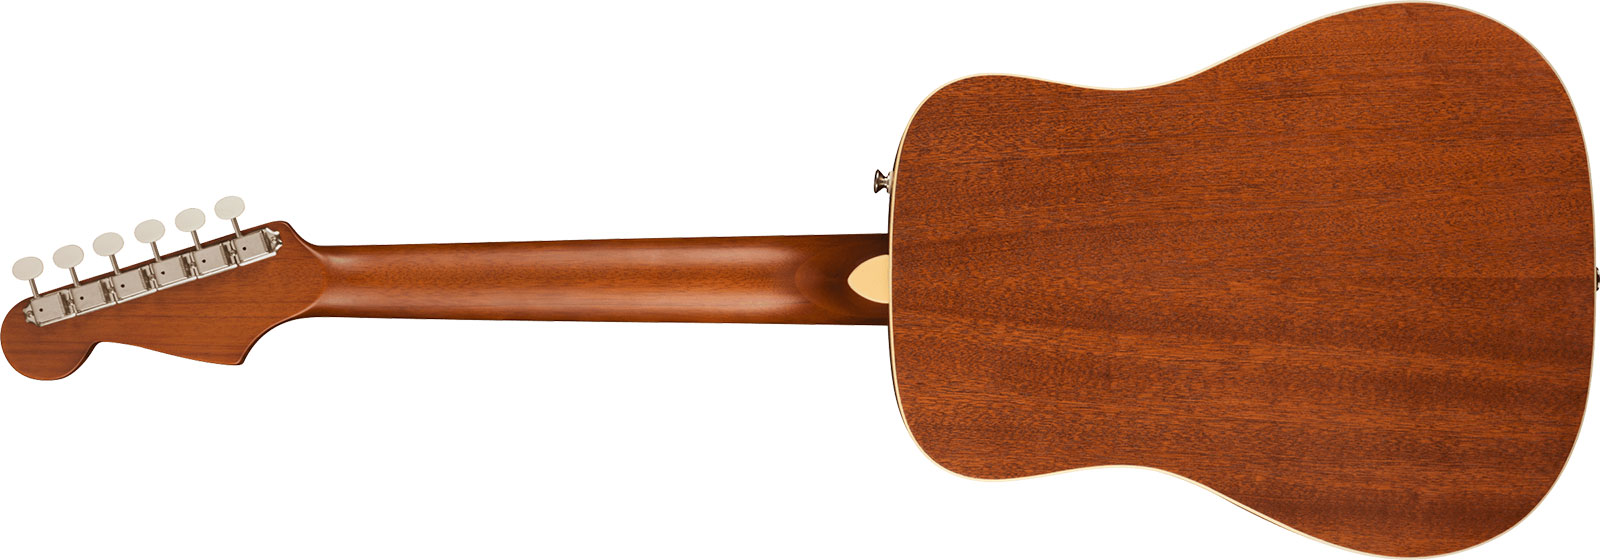 Fender Redondo Mini All Mahogany California Ltd Dreadnought 1/2 Tout Acajou Noy - Natural Satin - Western reisgitaar - Variation 1